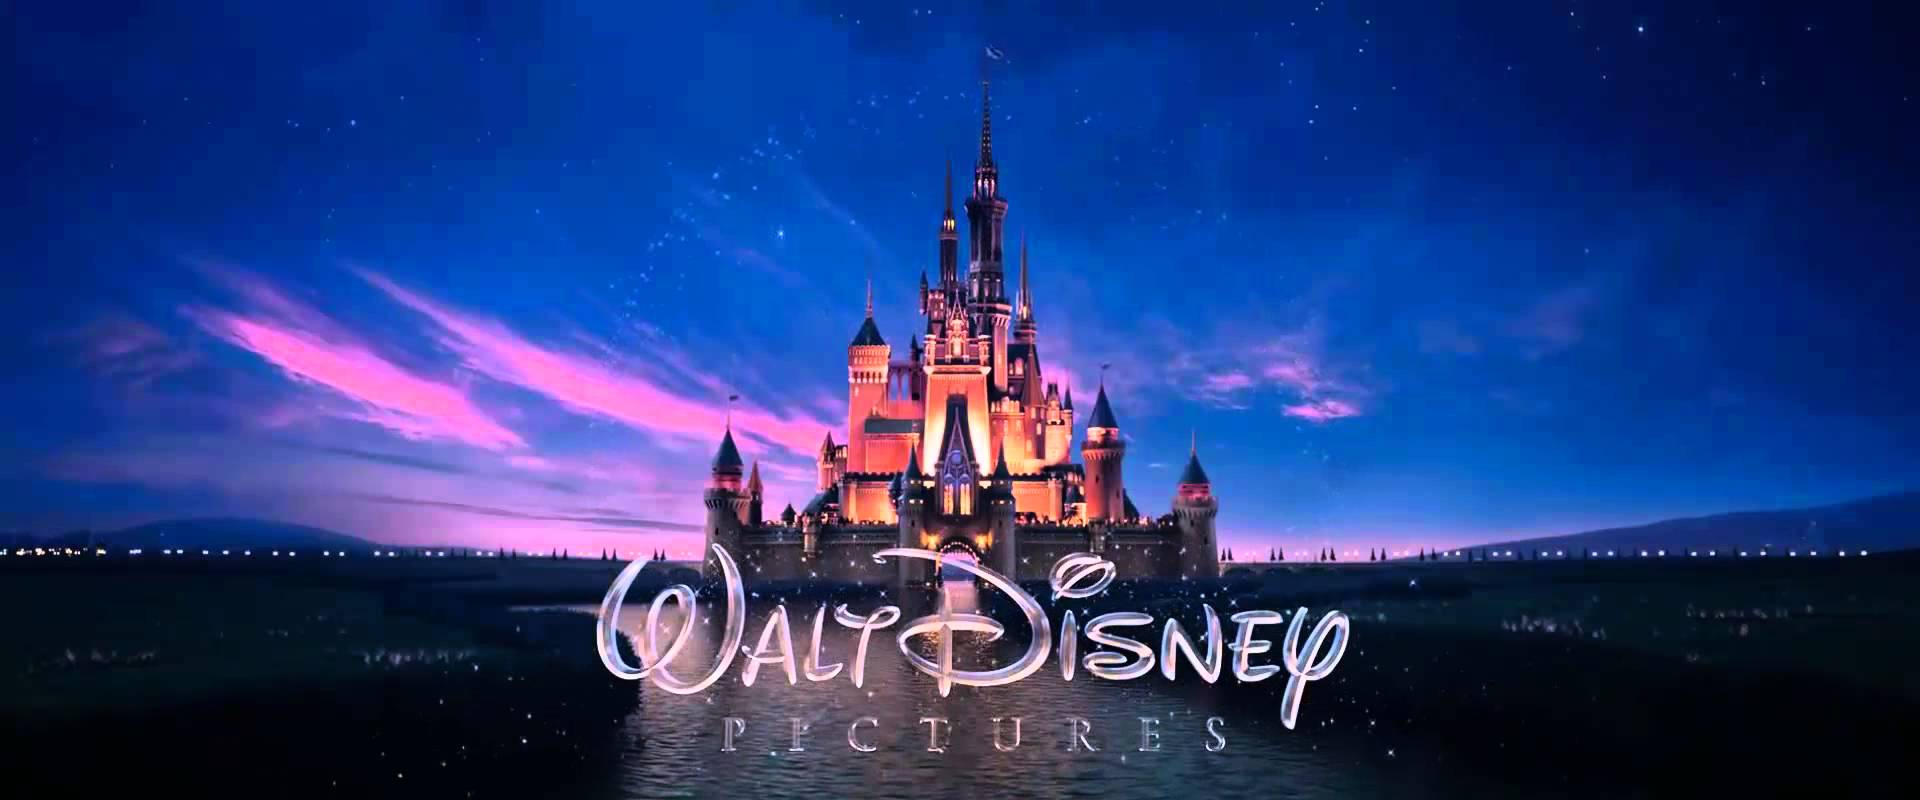 Walt Disney Pictures Pixar Animation Studios 1080p